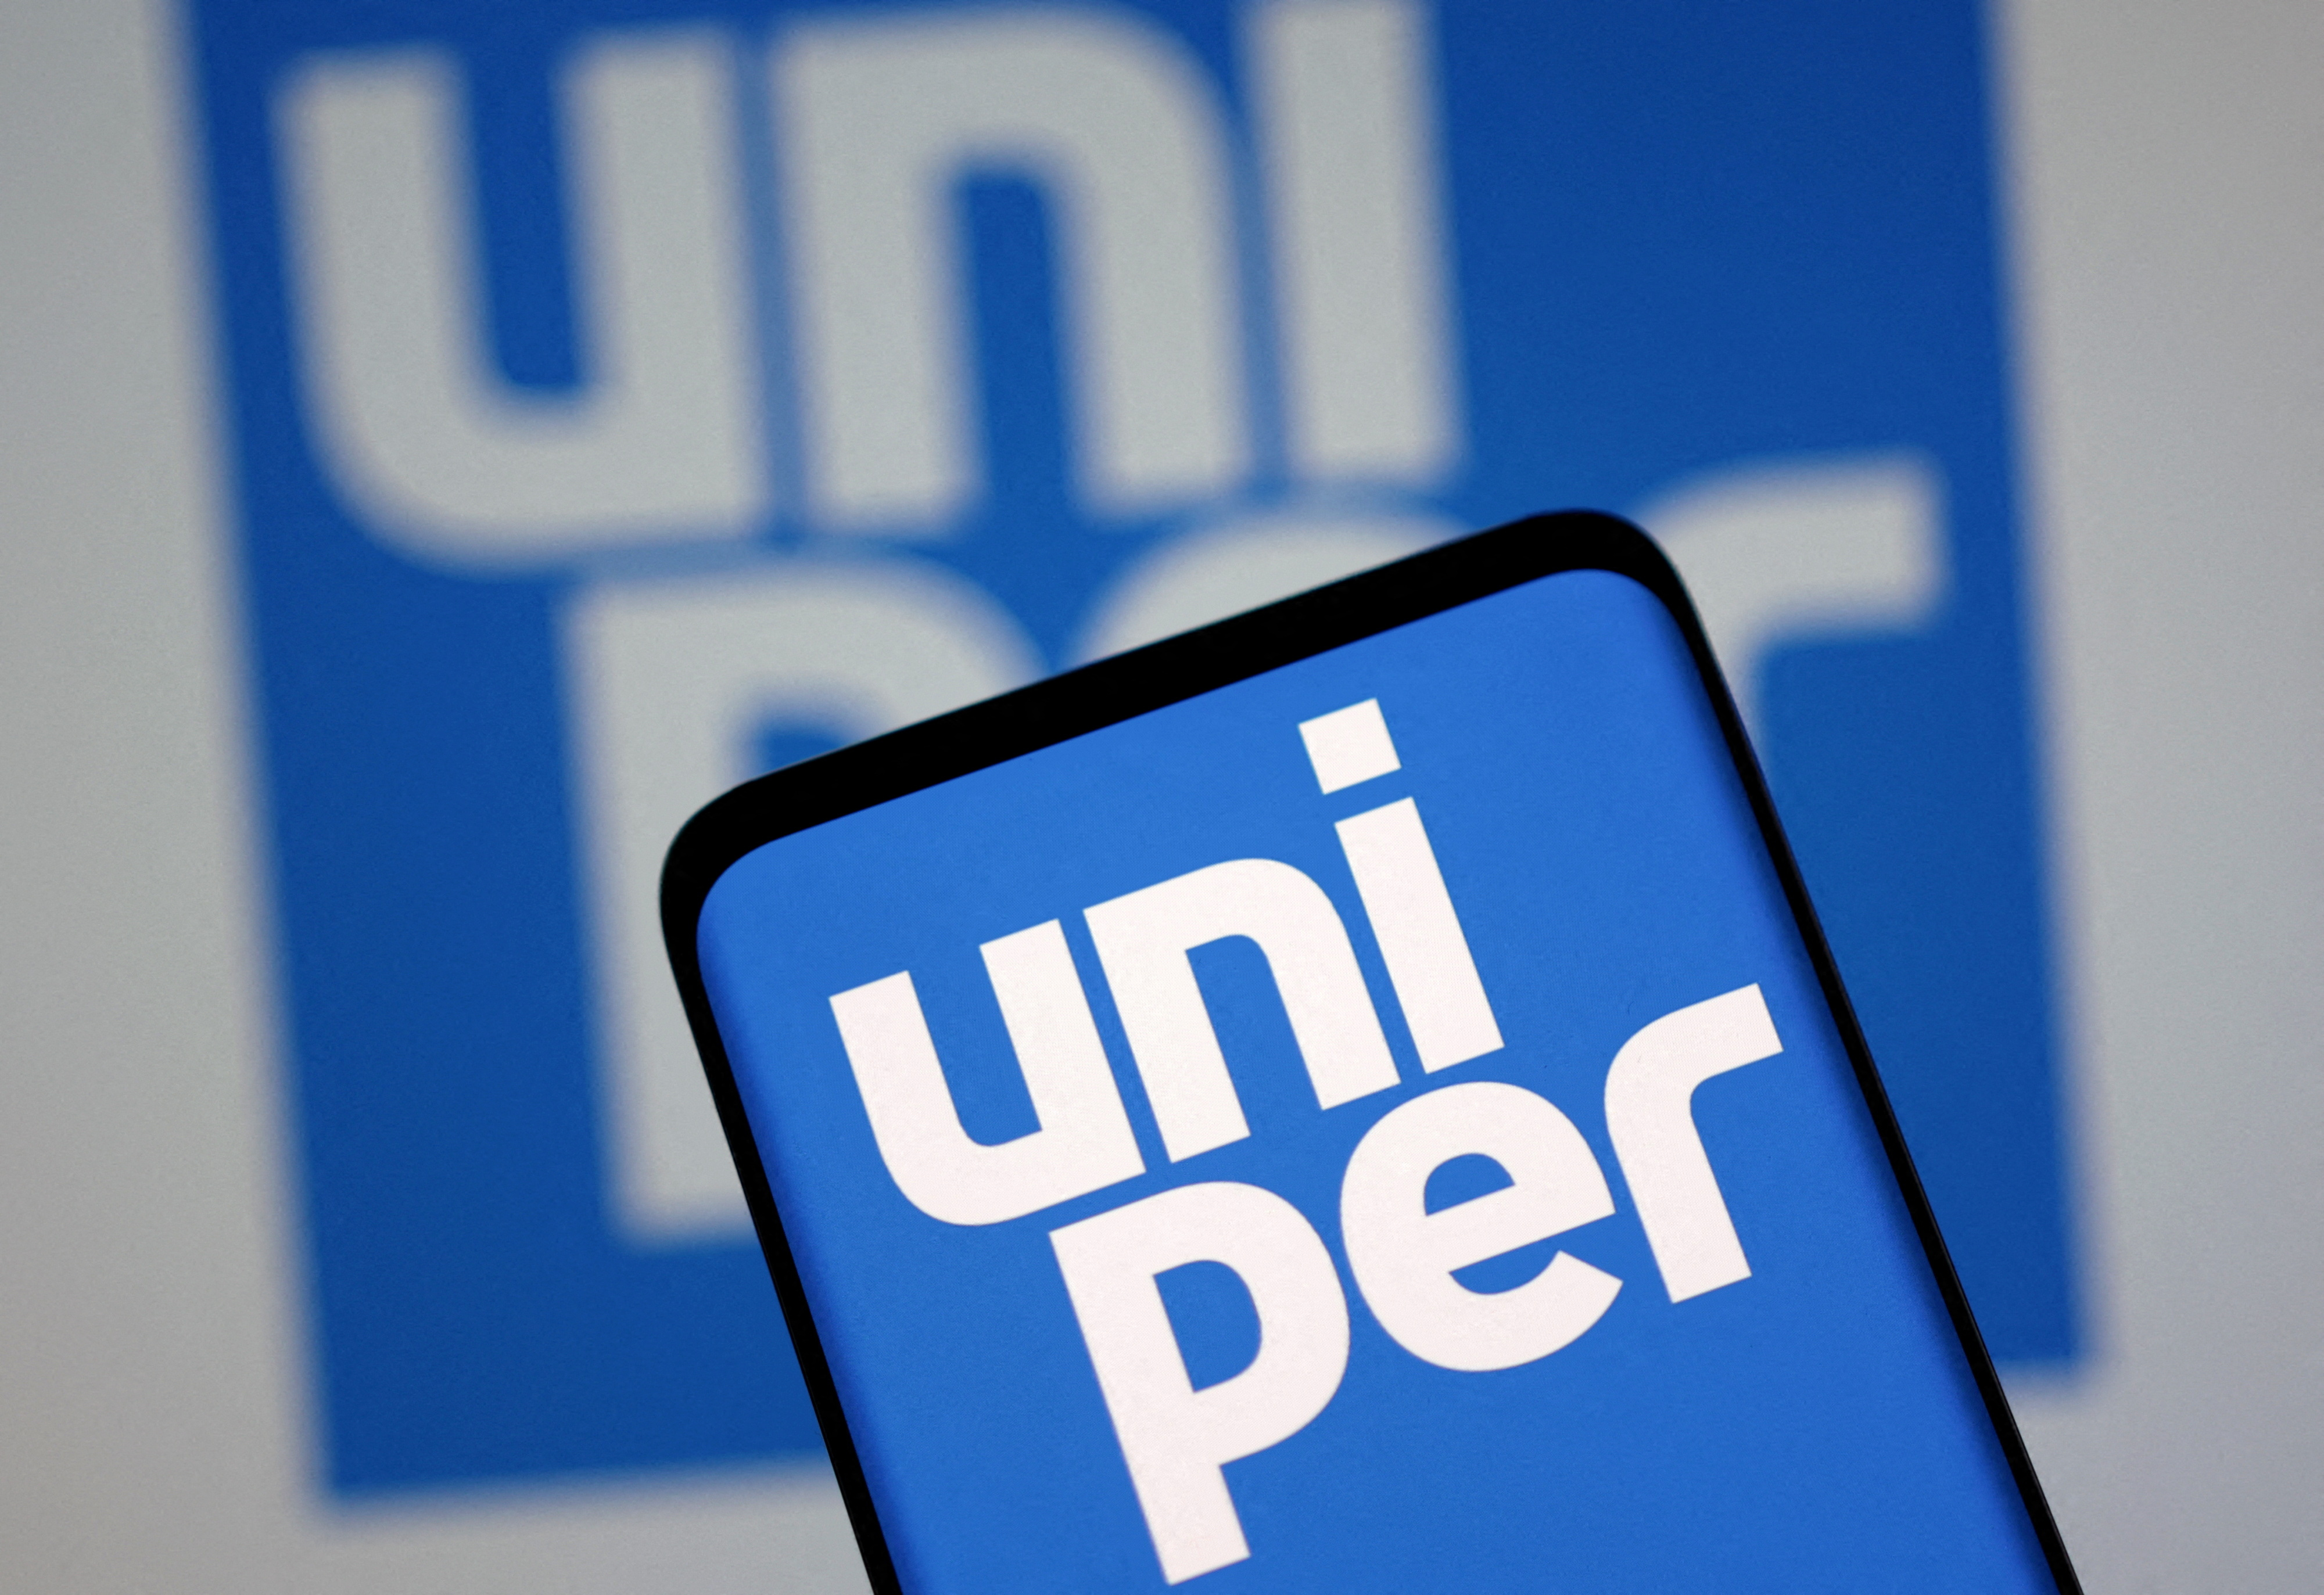 Illustration shows Uniper logo